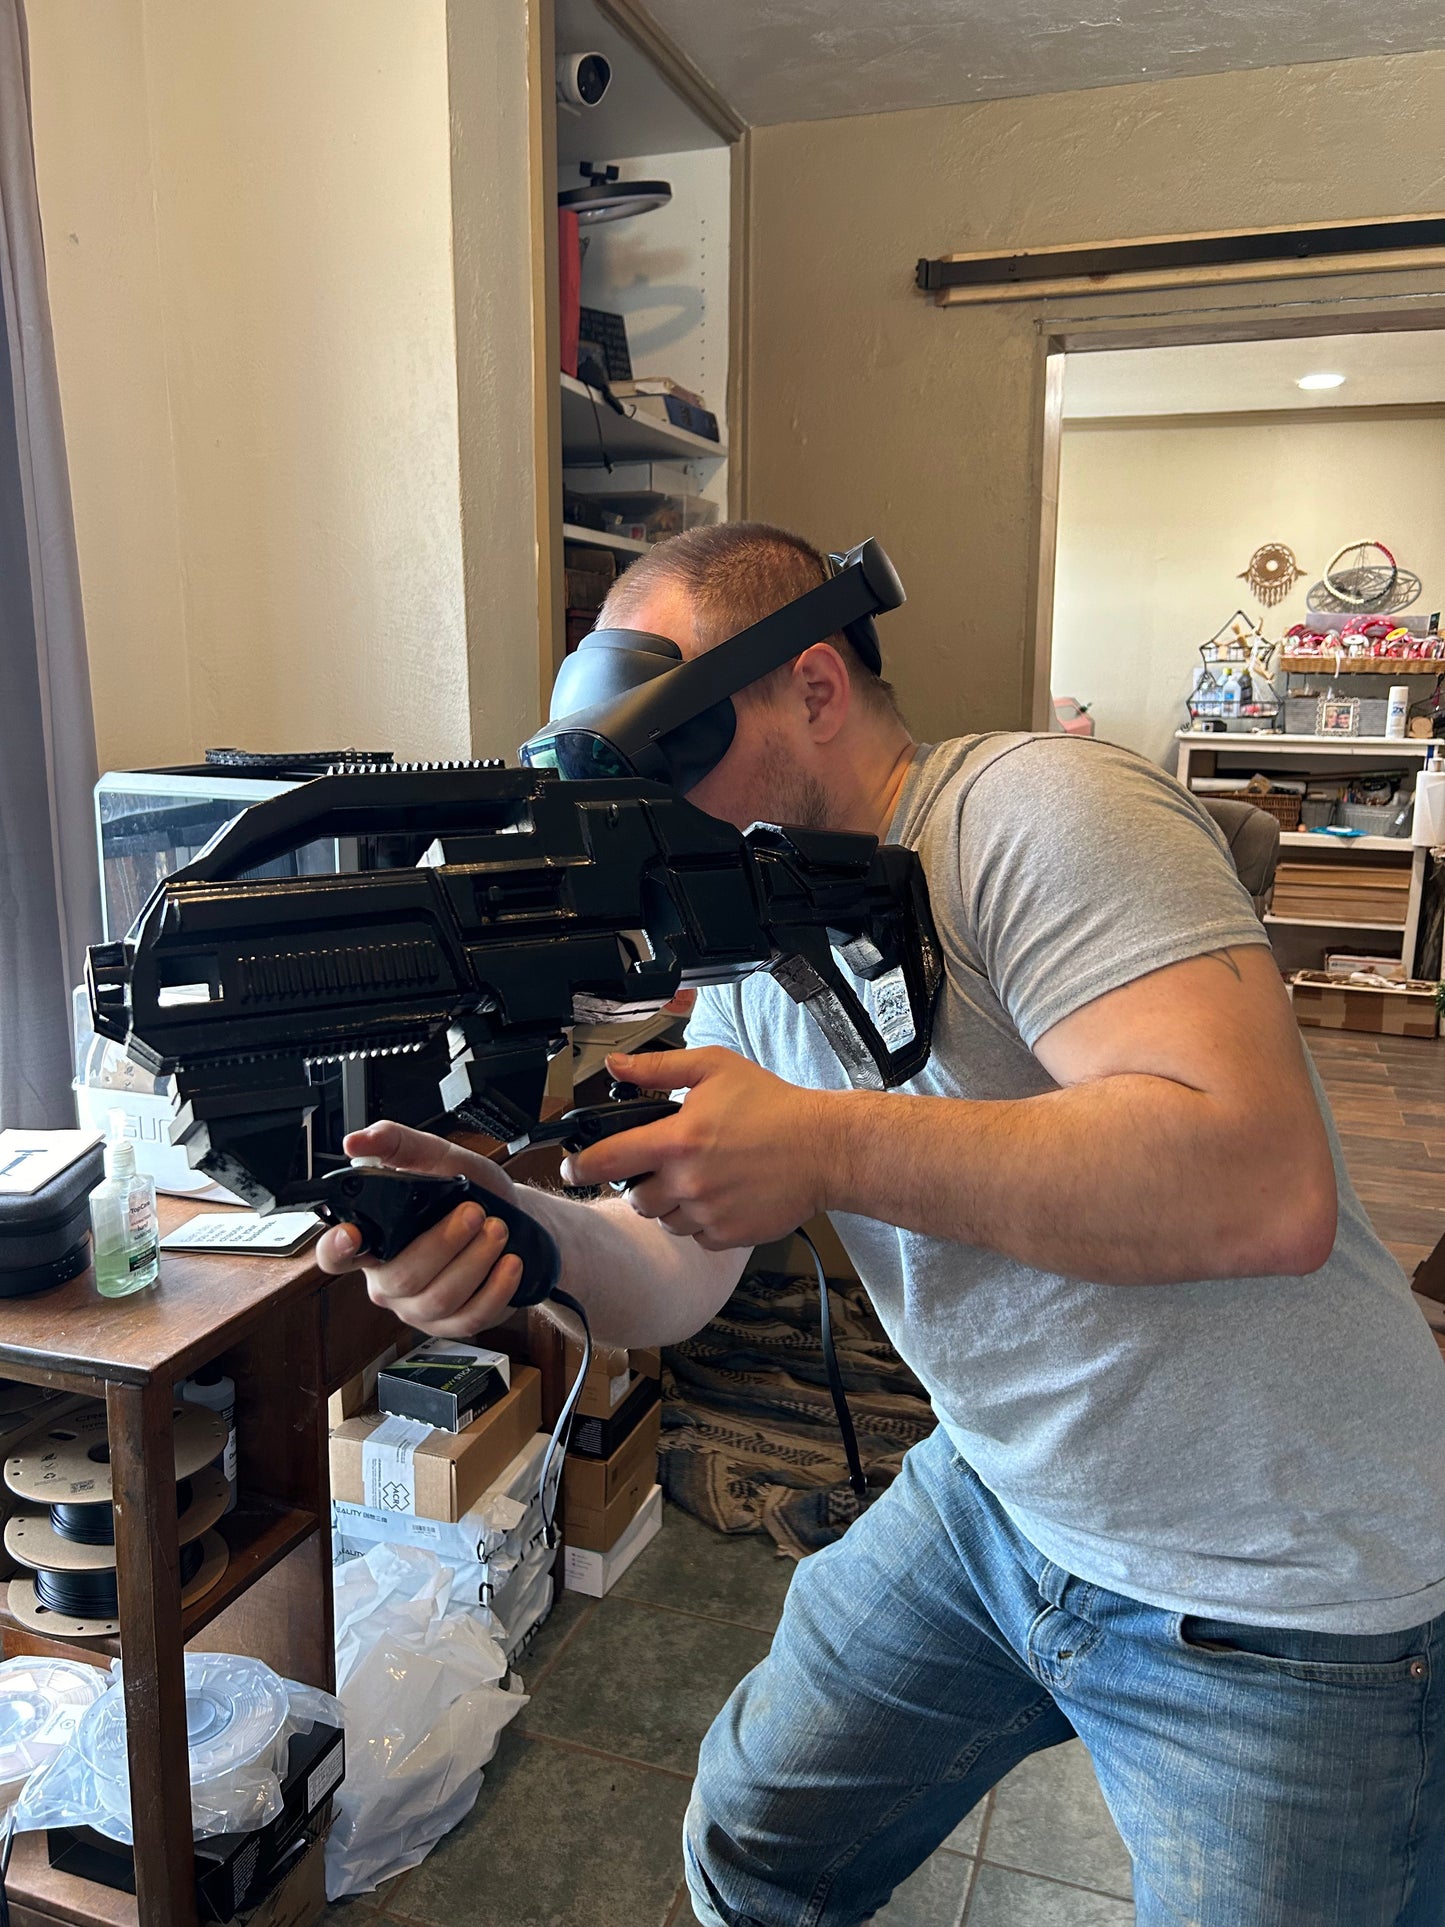 Mass X Force - Momentum SMG VR Gunstock - Coming Soon!